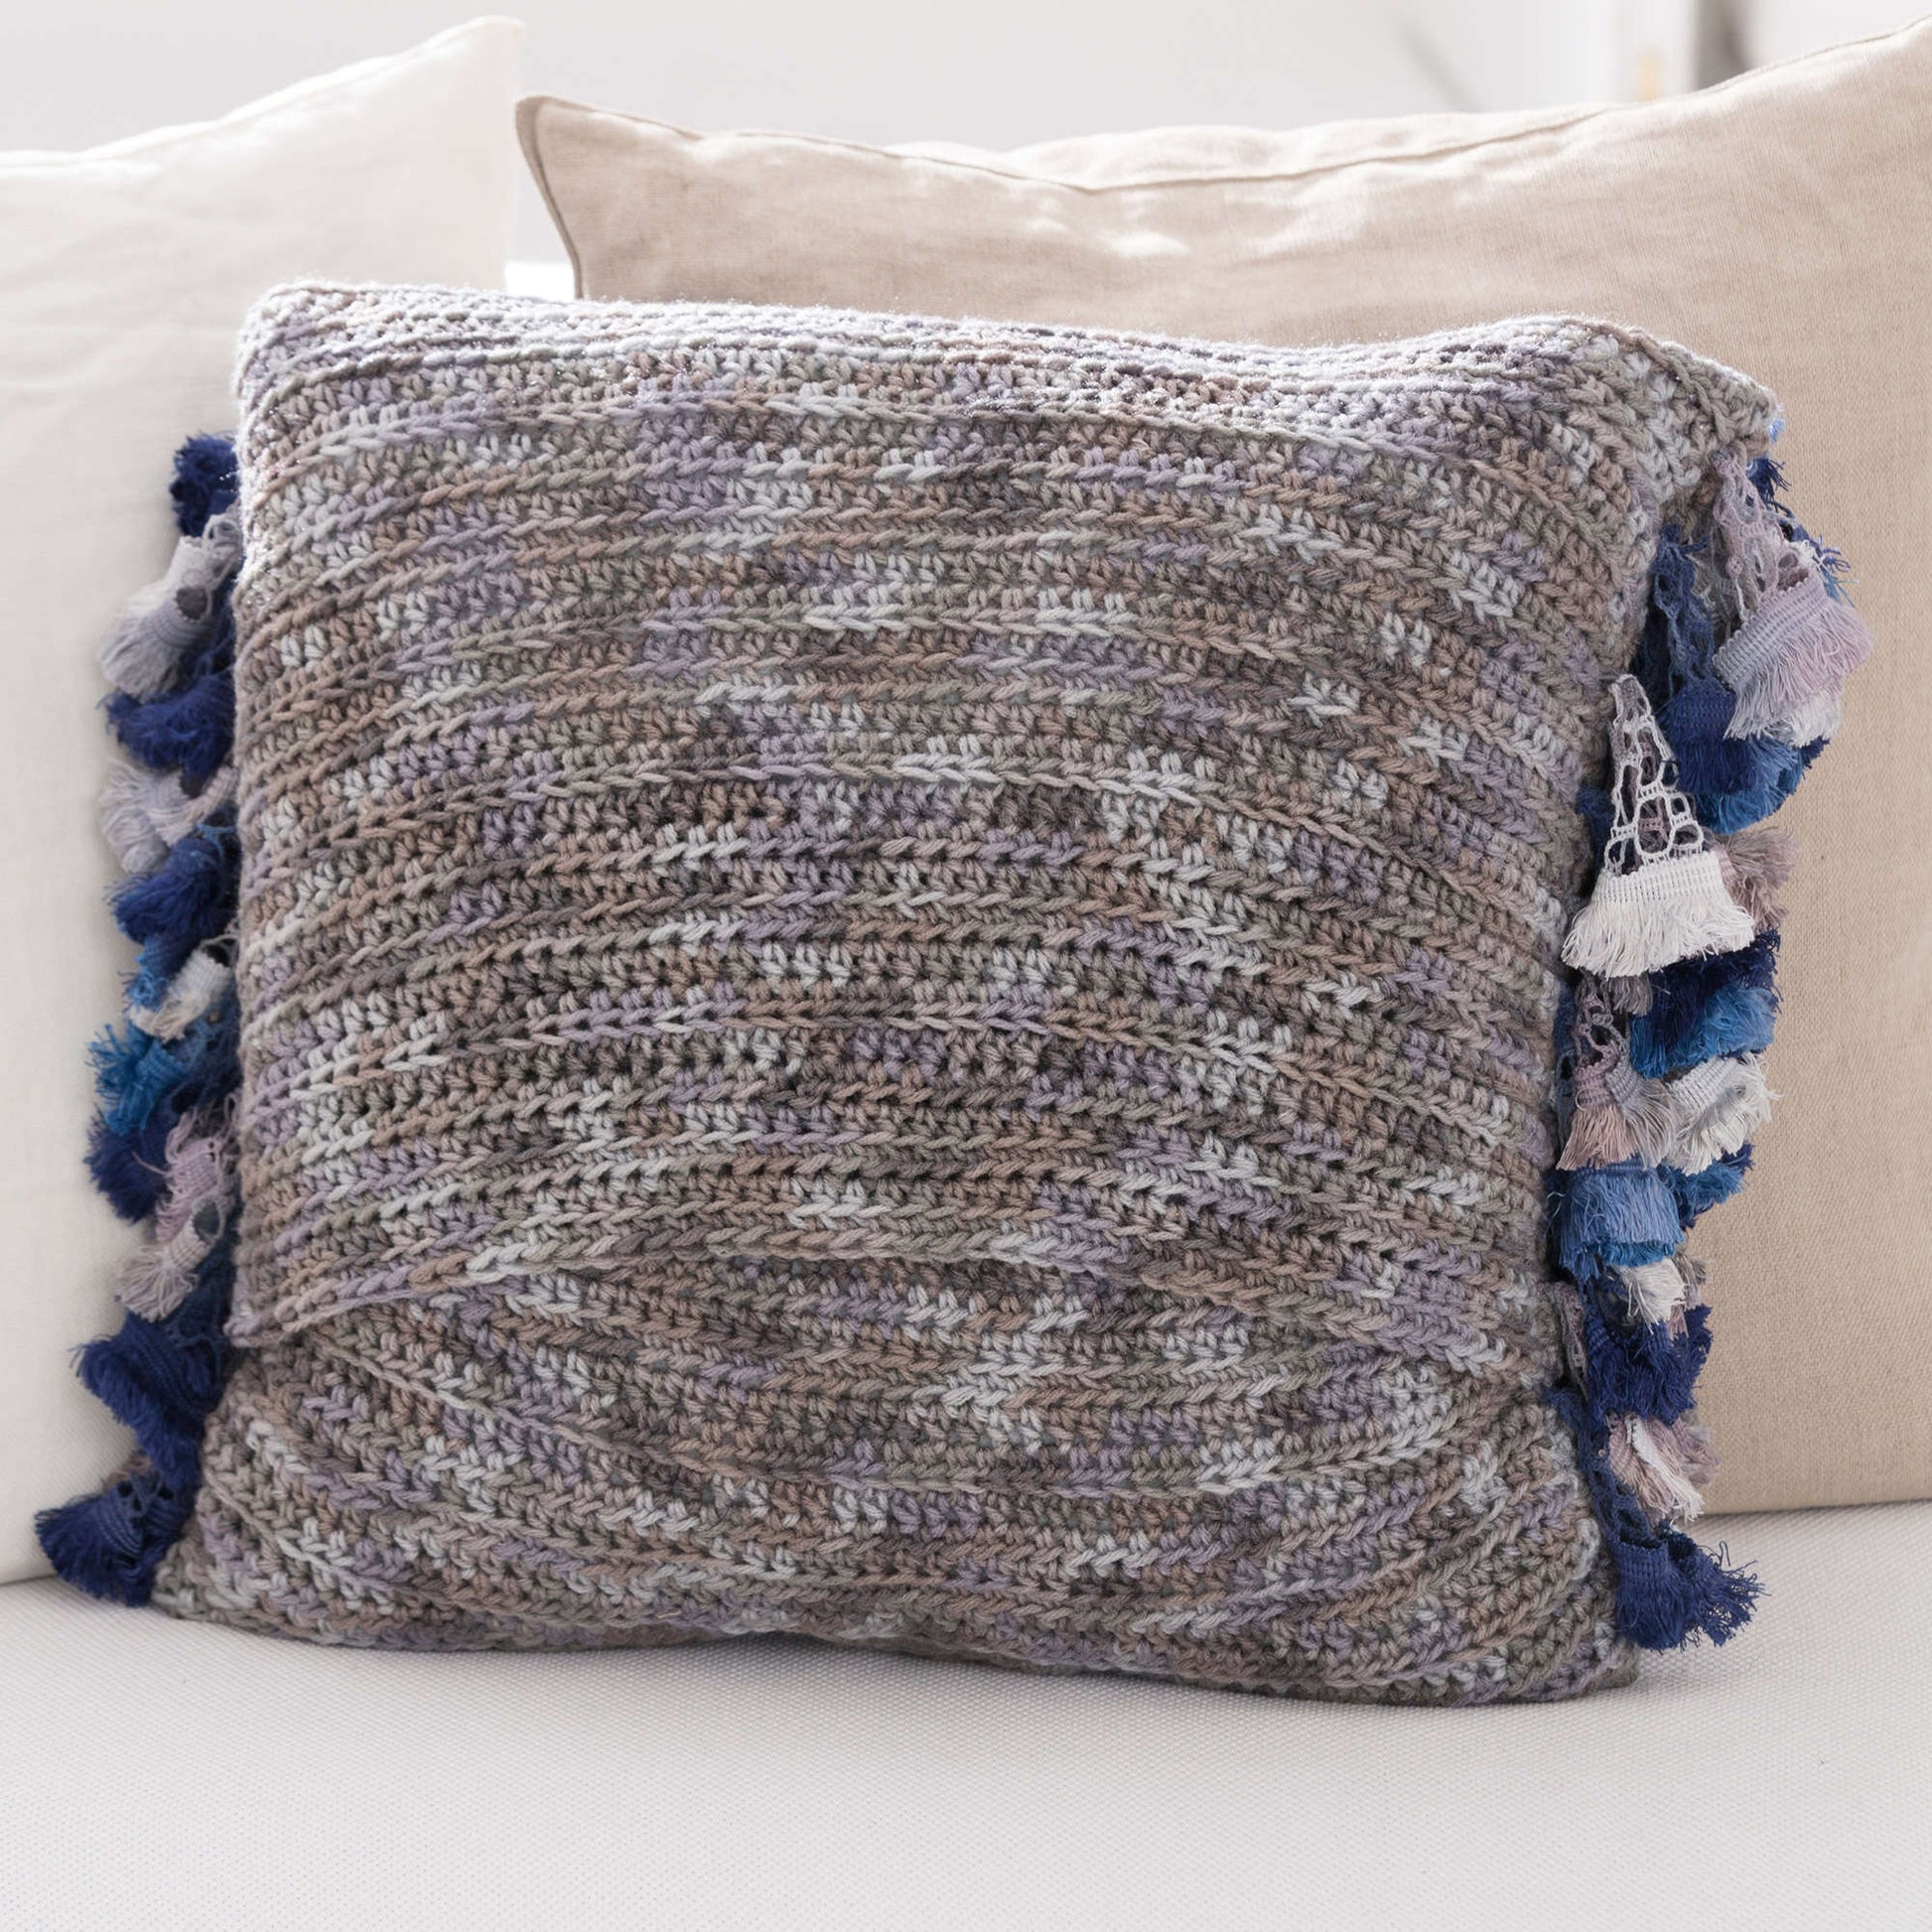 Free Red Heart Crochet Rows Of Ruffles Pillow Pattern